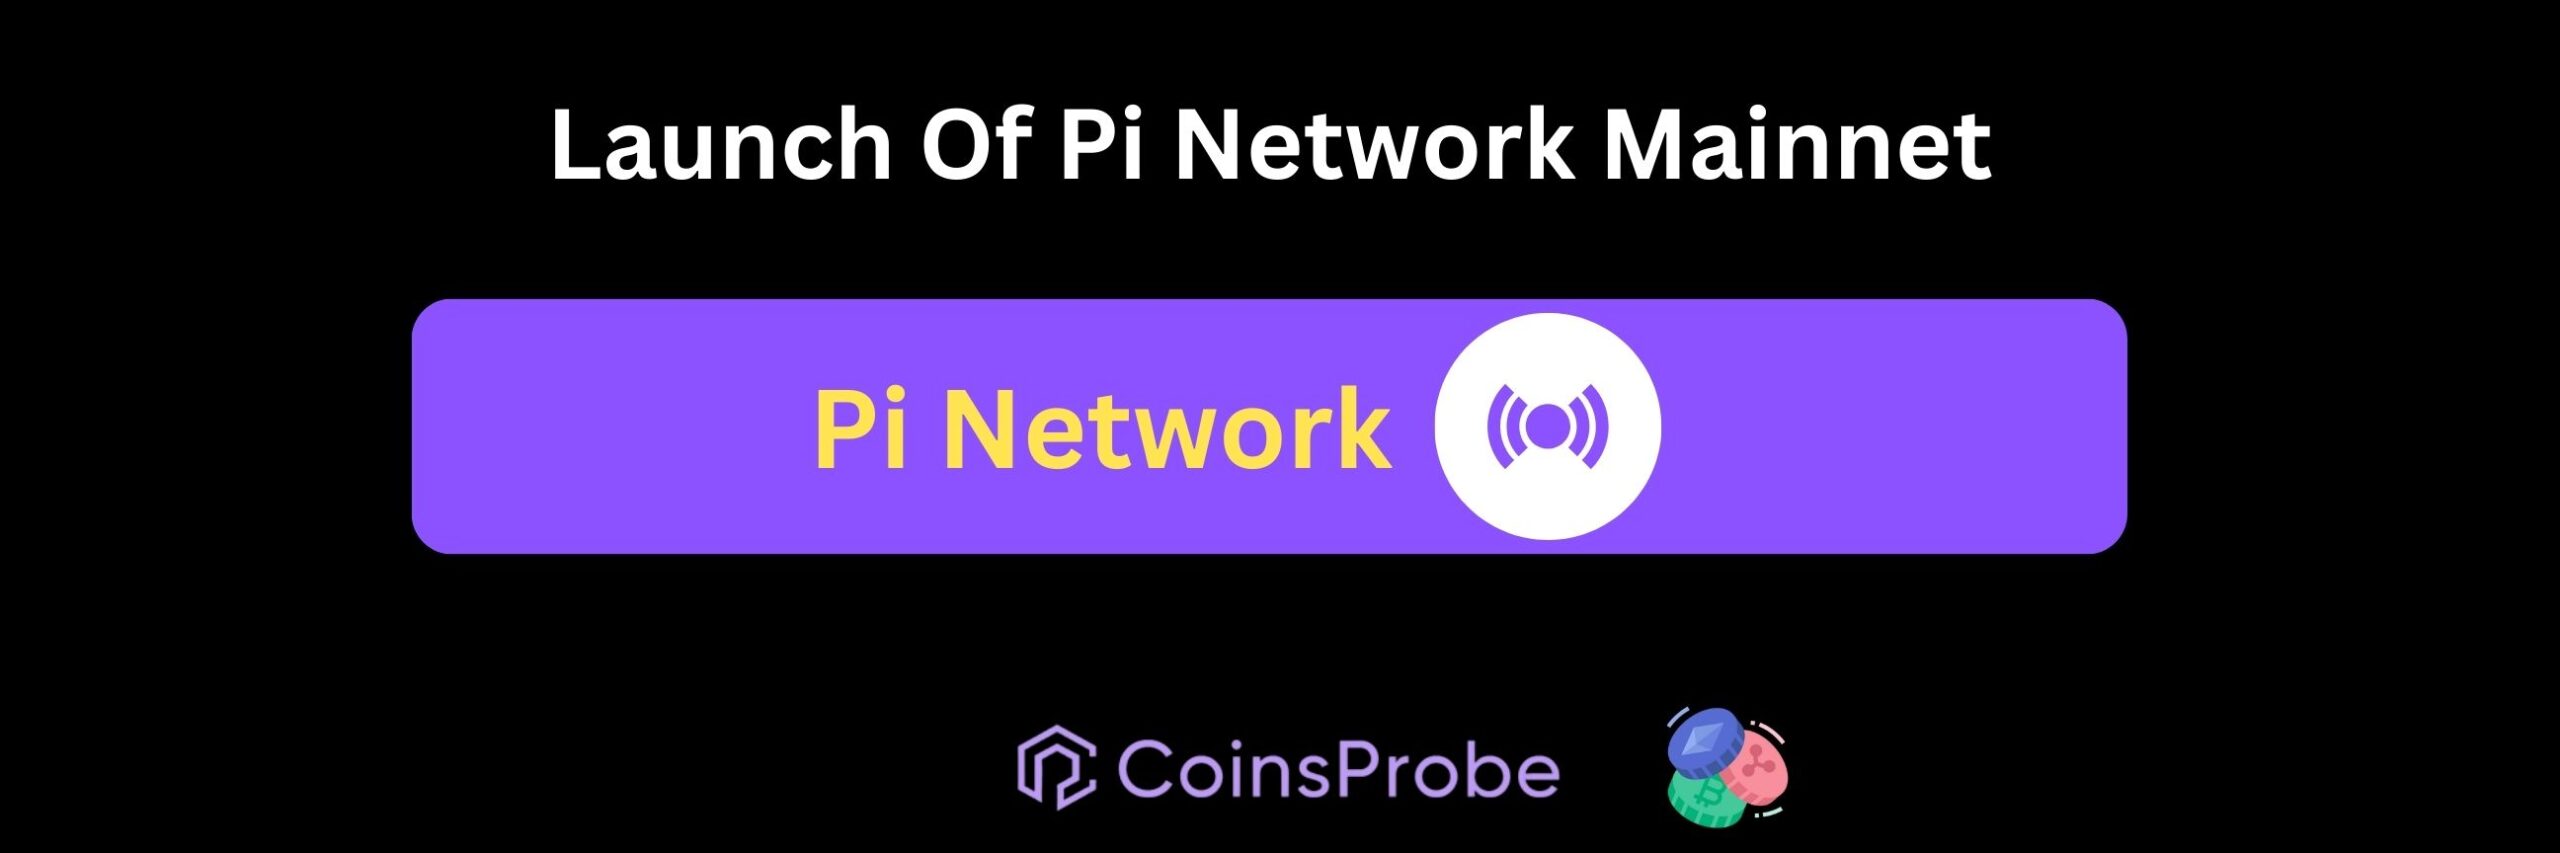 Pi Networks Mainnet launch